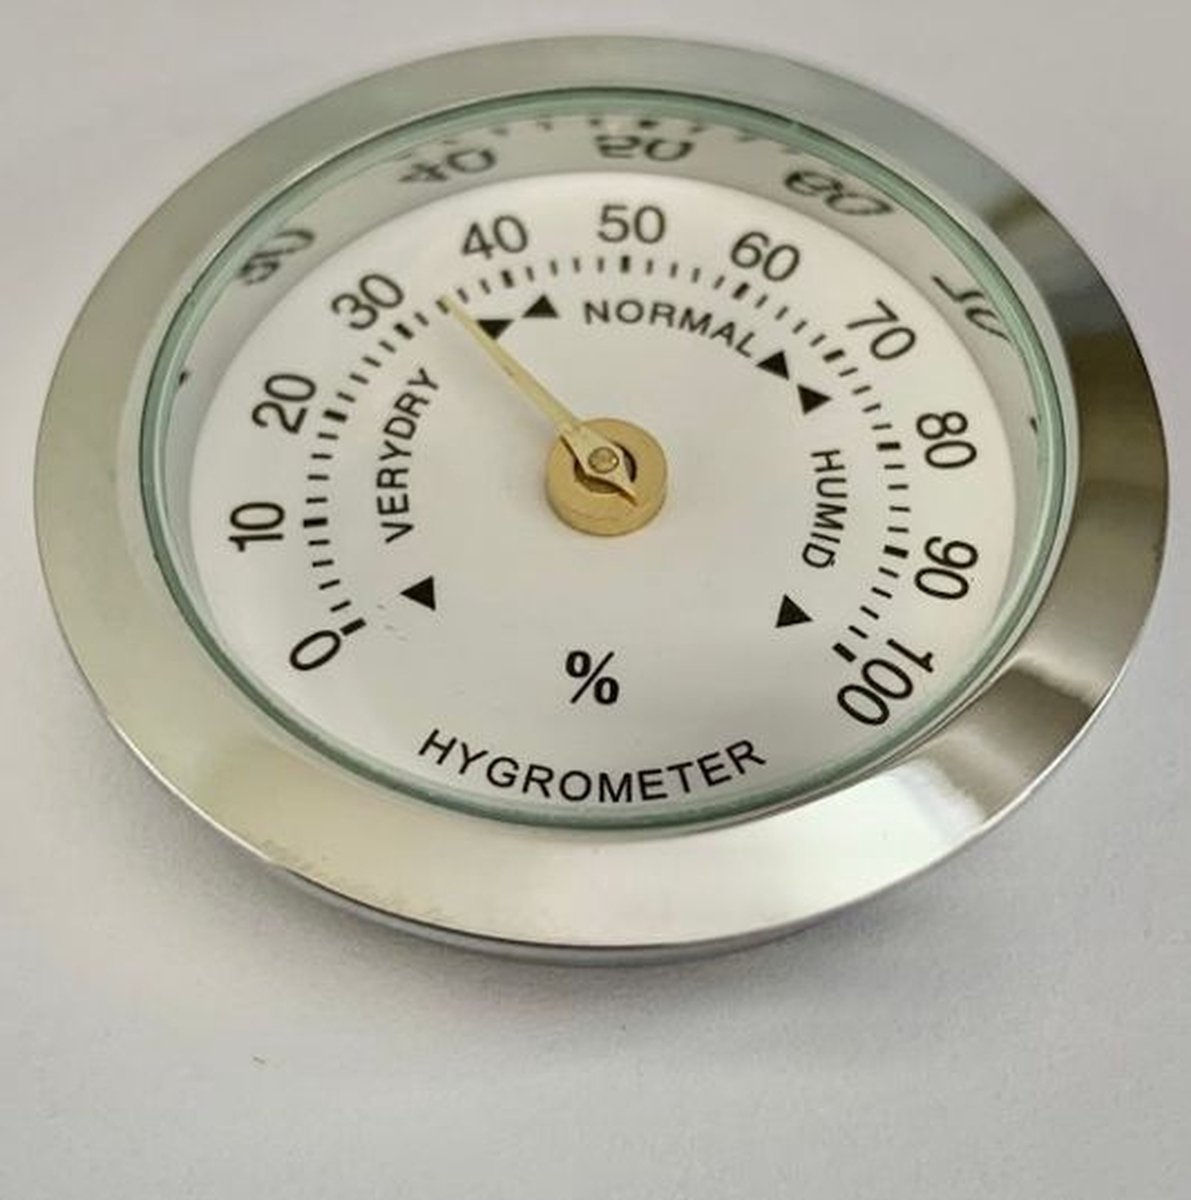 Hygrometer - analoog - zilverkleurig - 37 mm groot - 9 mm dik - kleine hygrometer - vochtmeter